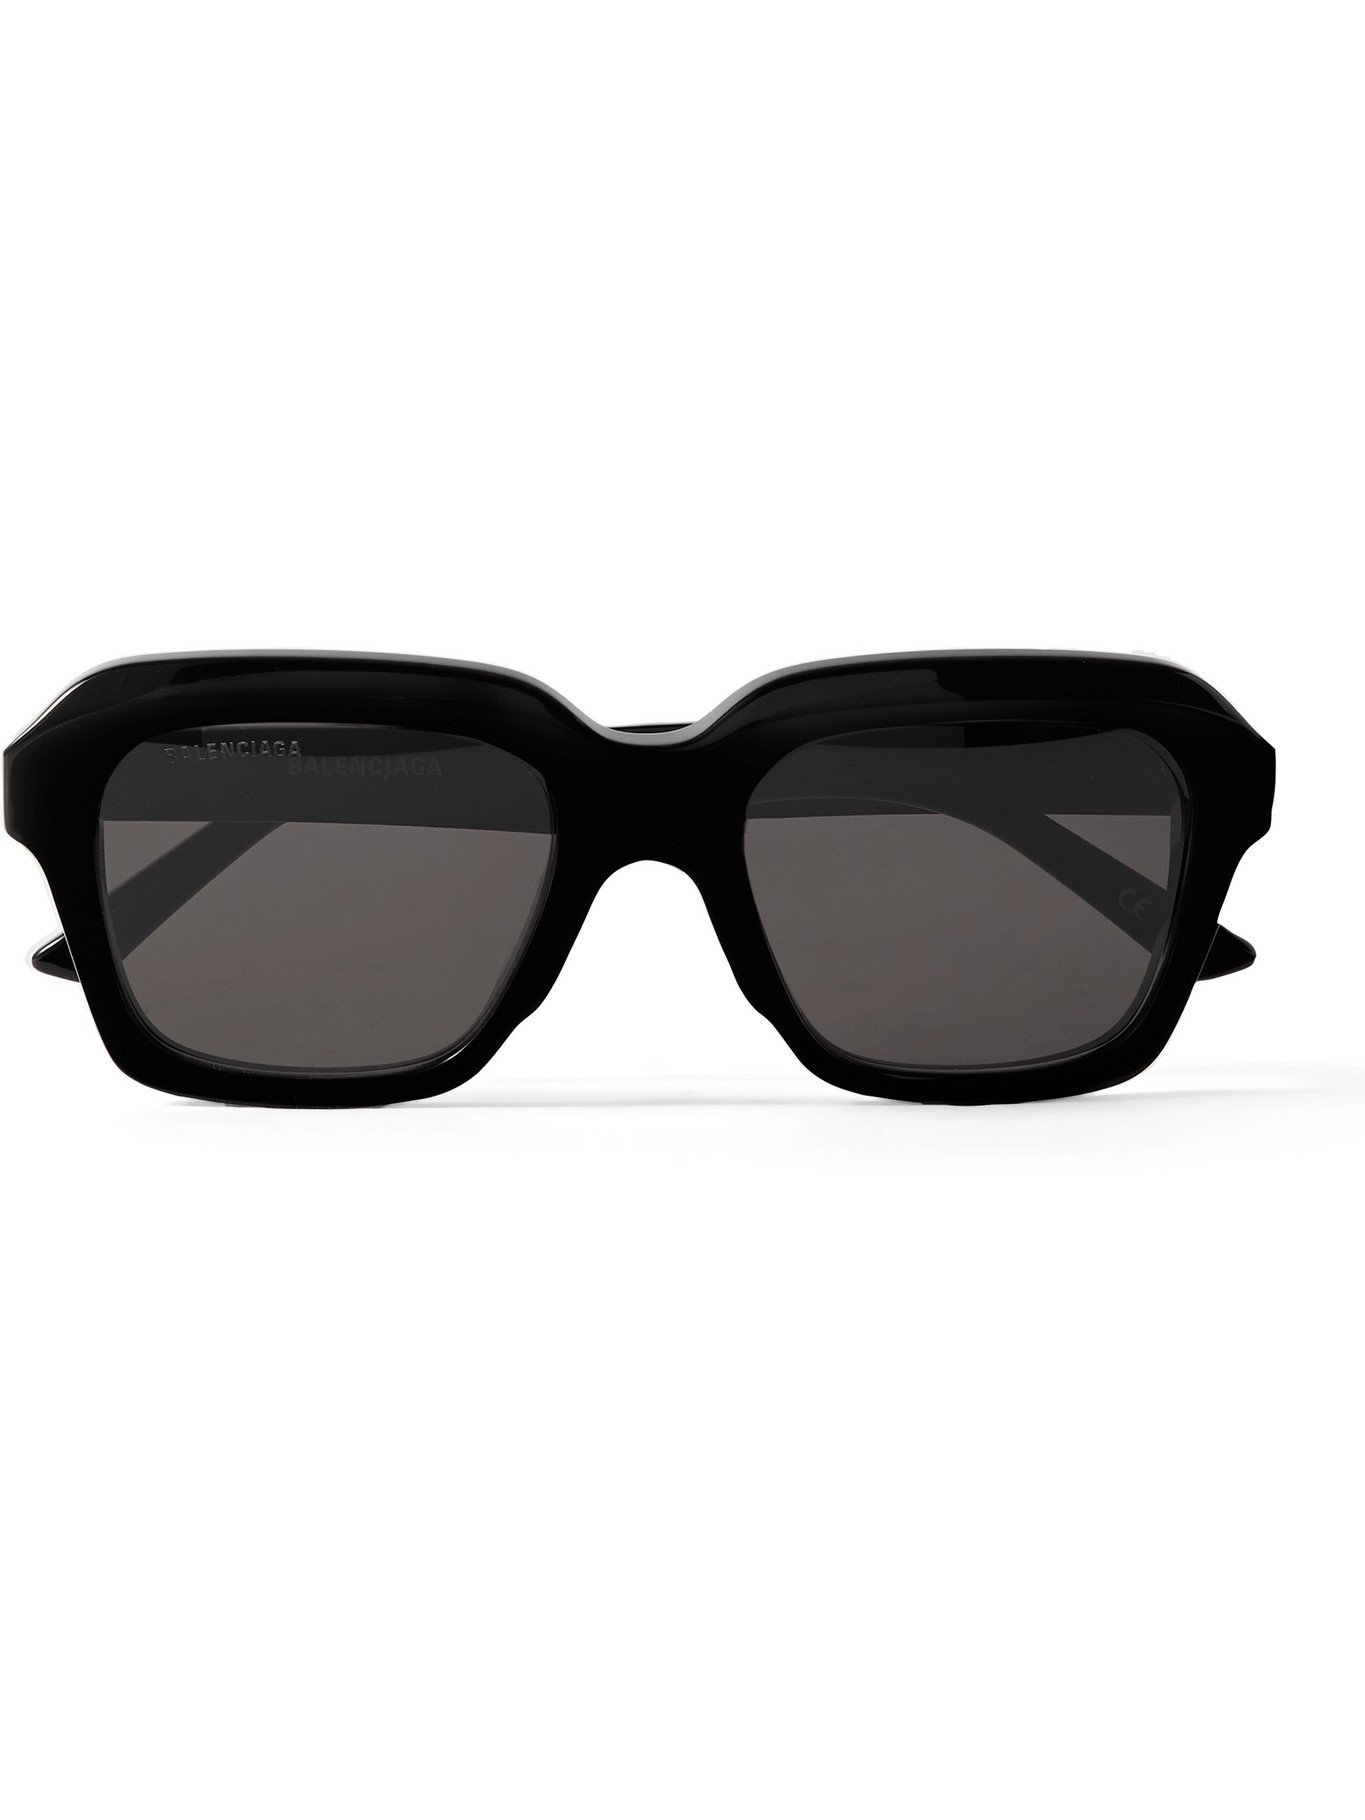 BALENCIAGA - Square-Frame Acetate Sunglasses - Black Balenciaga